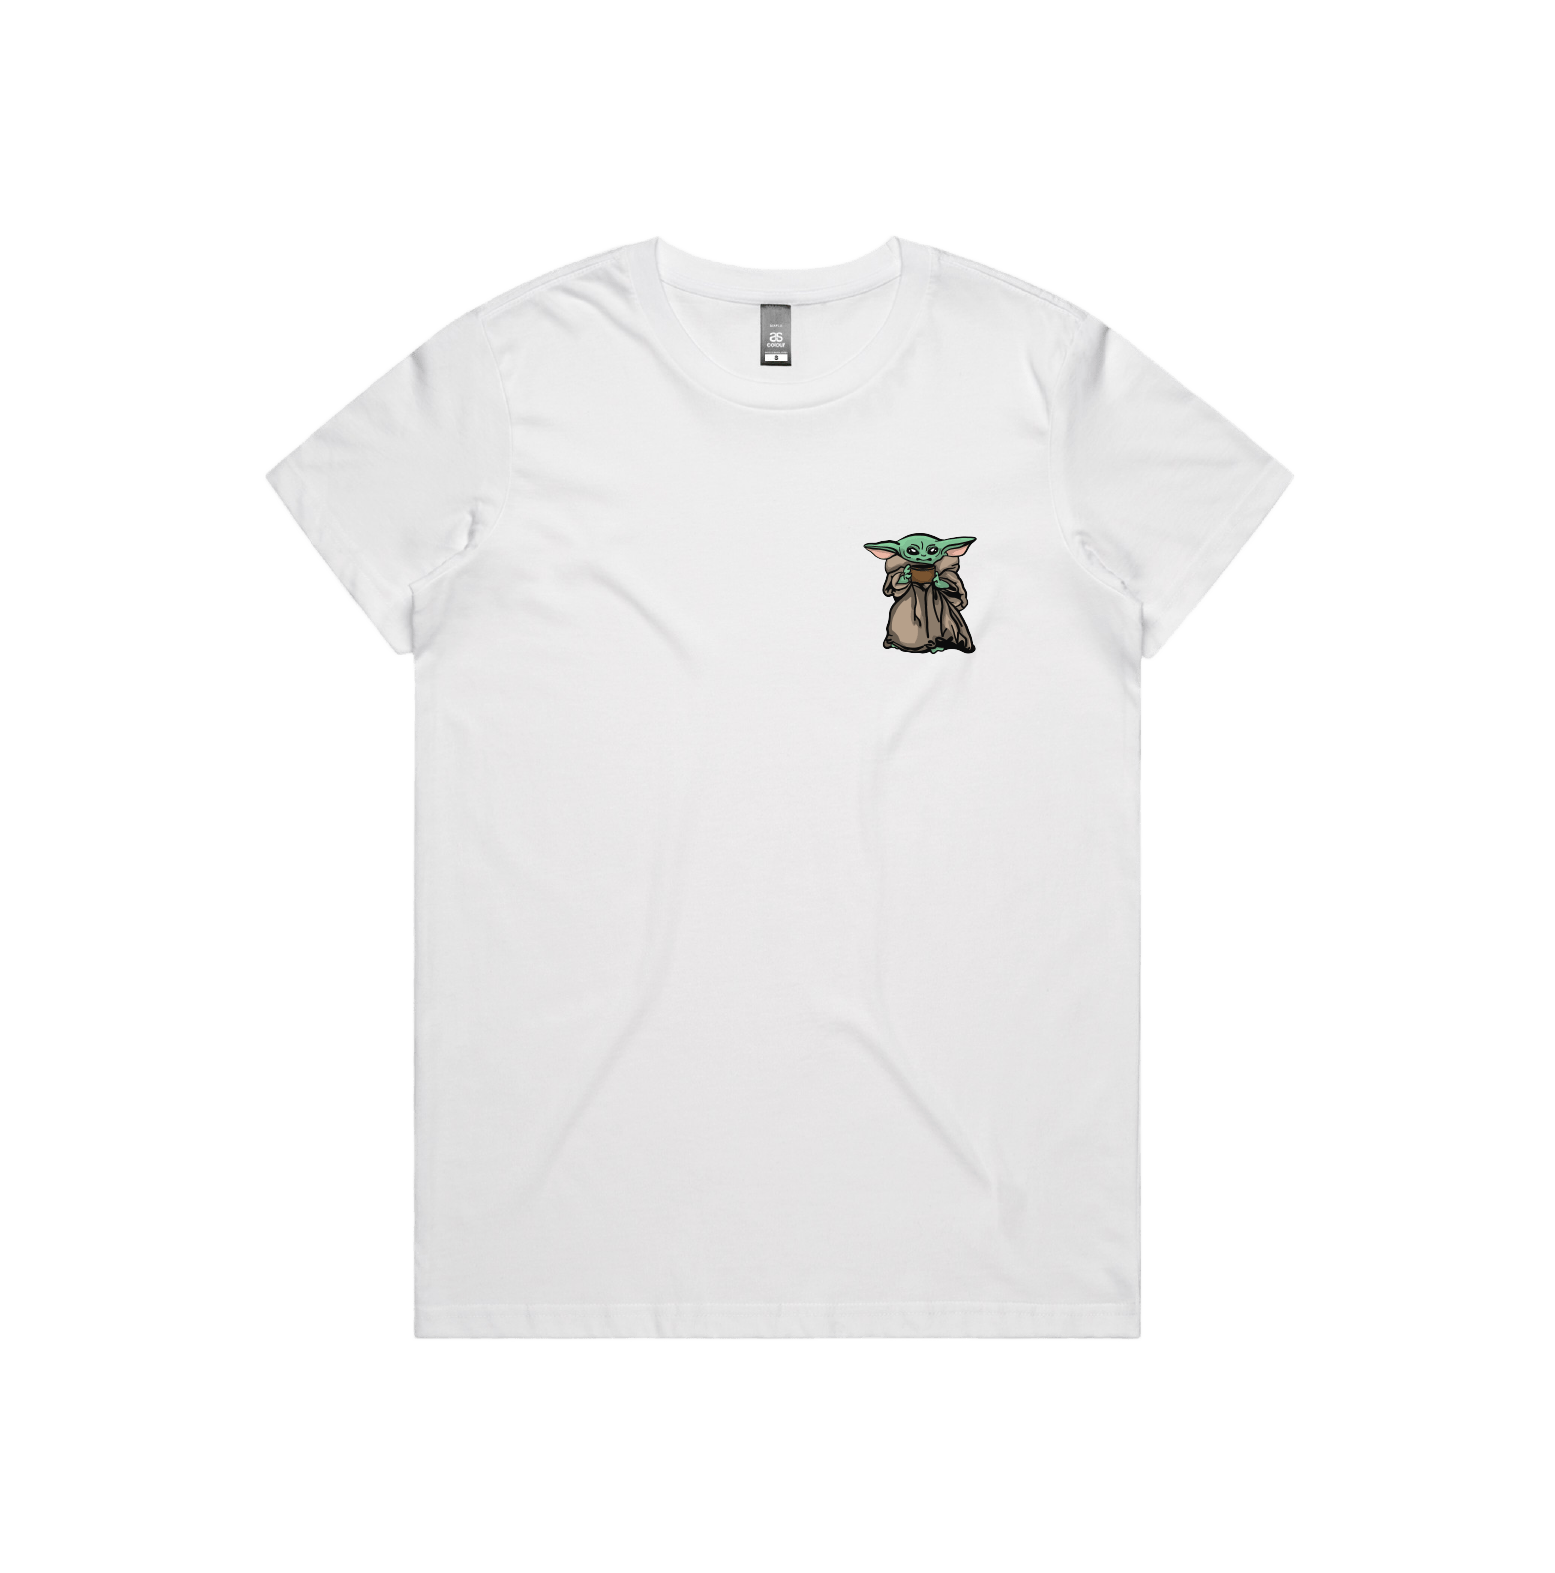 XS / White / Small Front Design Baby Yoda 👶 - Women's T Shirt